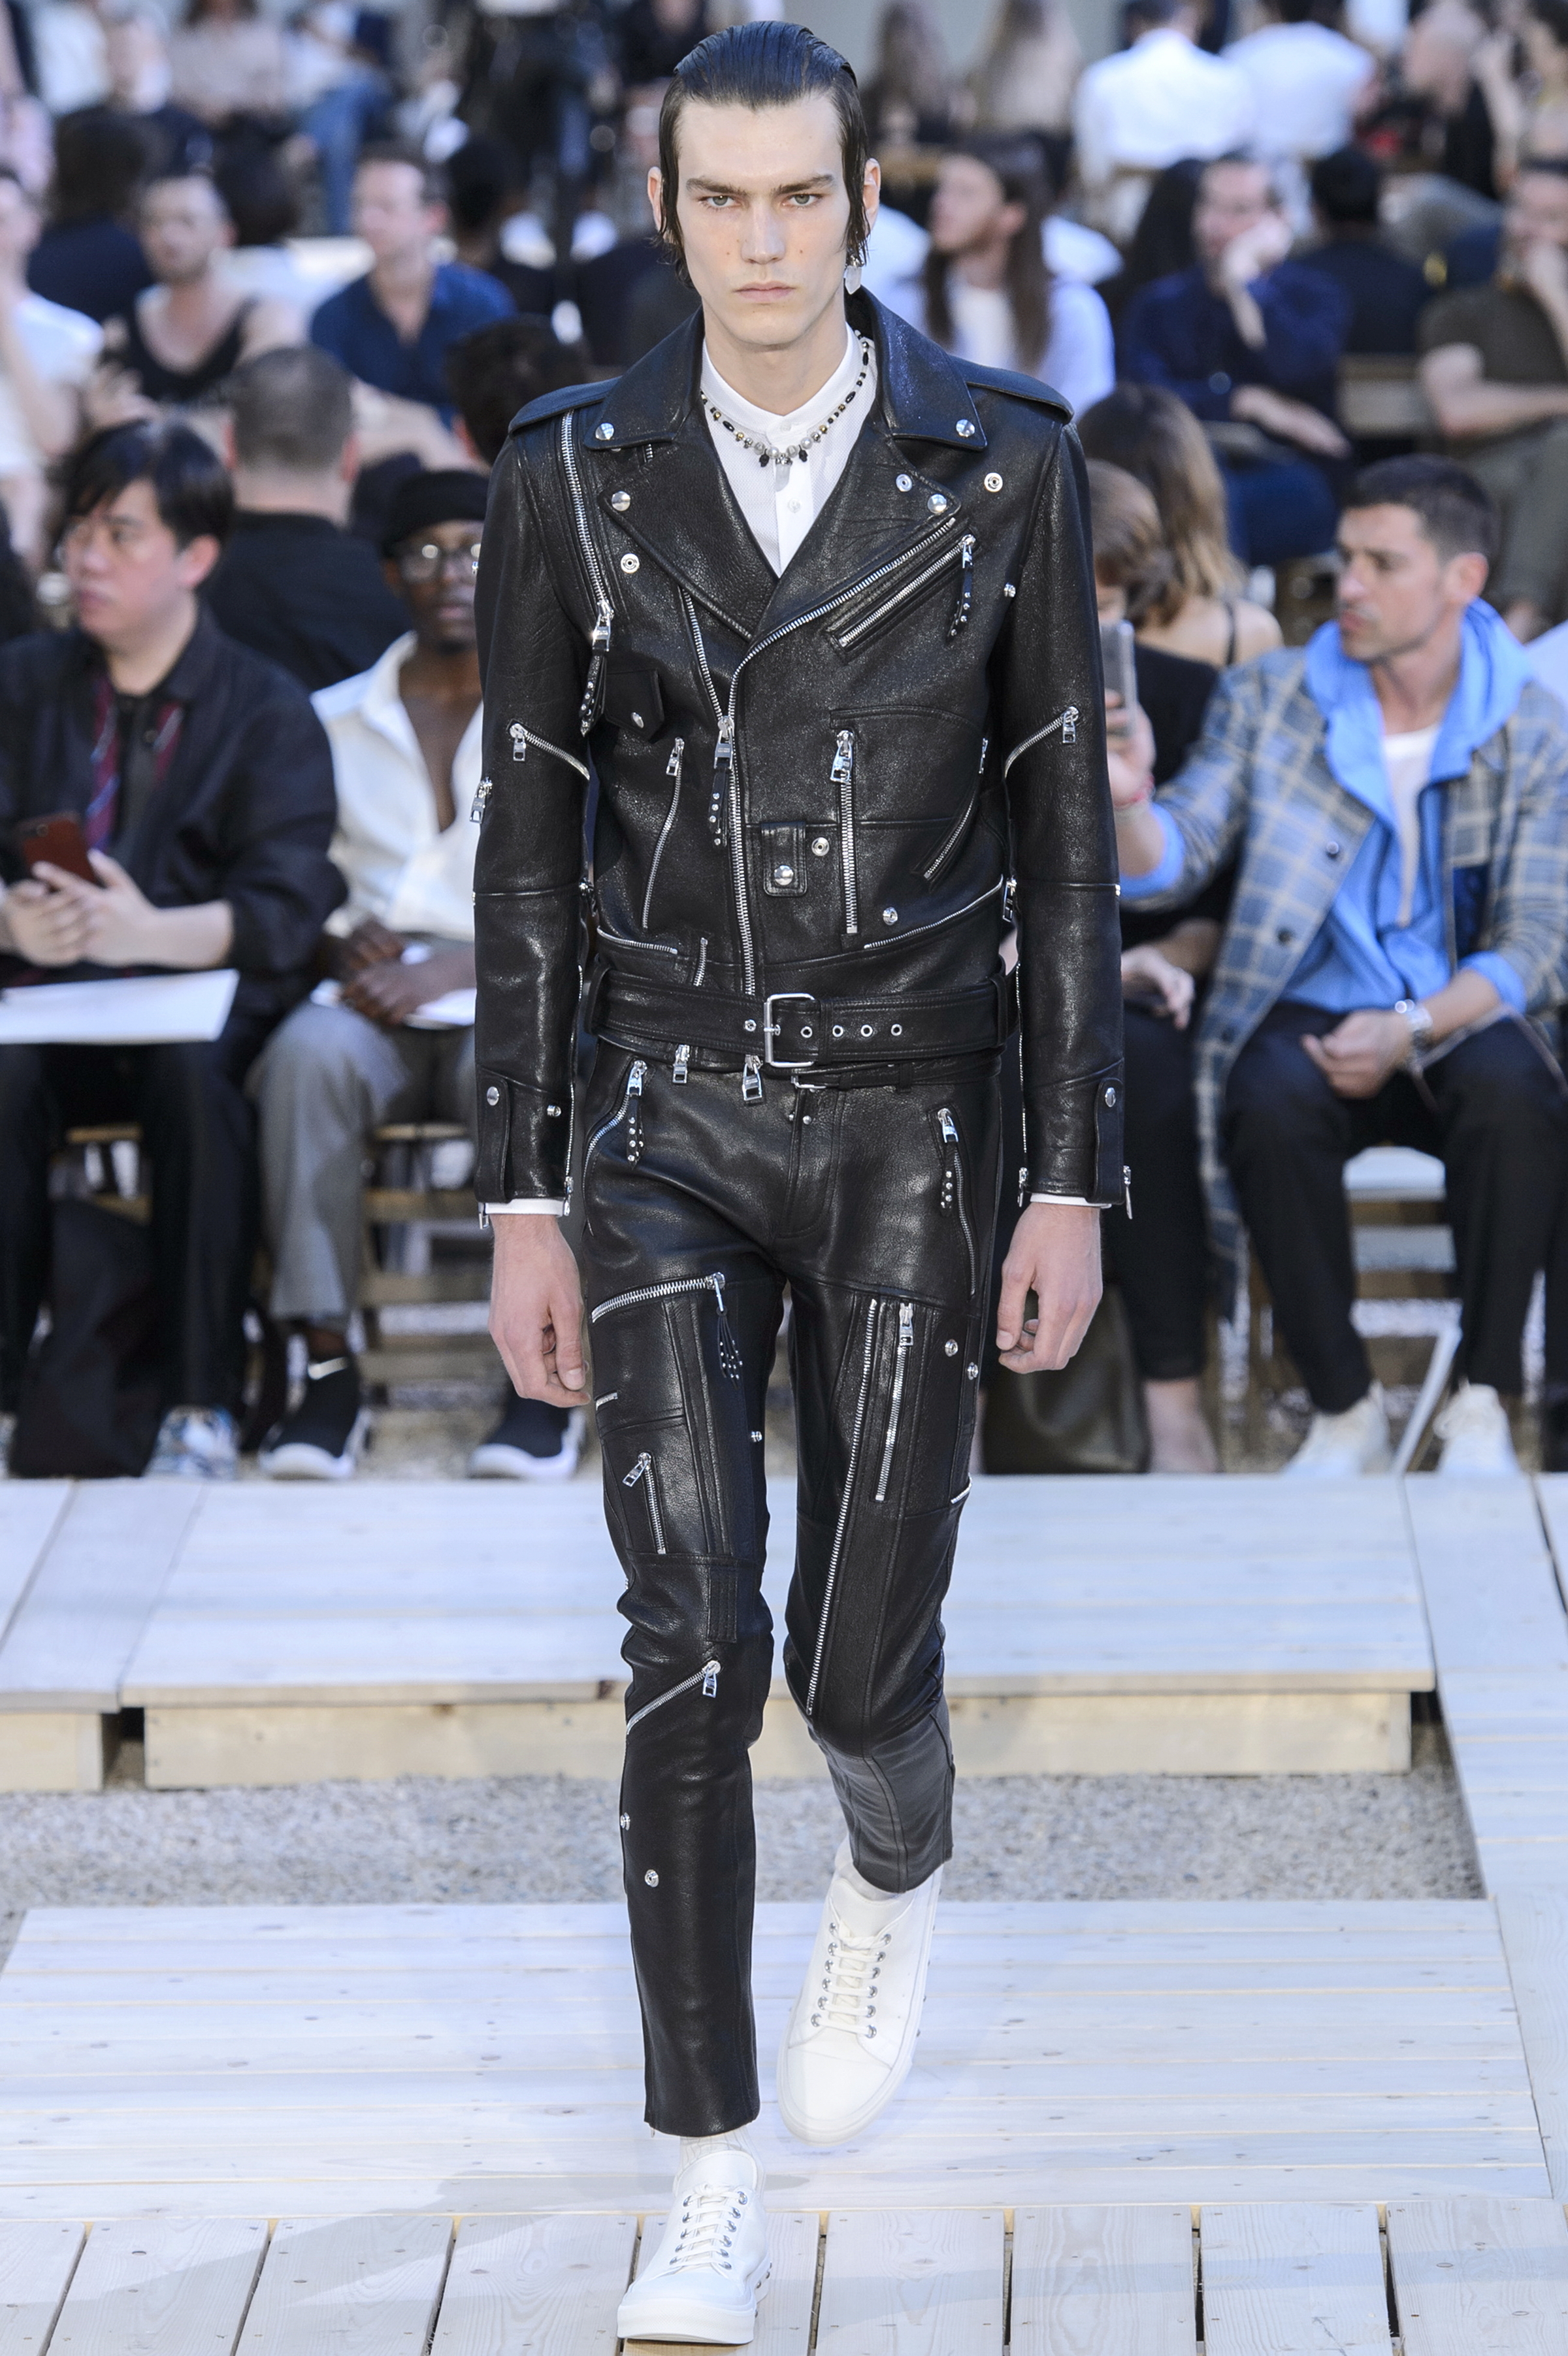 Paris Fashion Week Spring/Summer: Kompletter Look aus Leder bei der Alexander McQueen Show (ddp images)